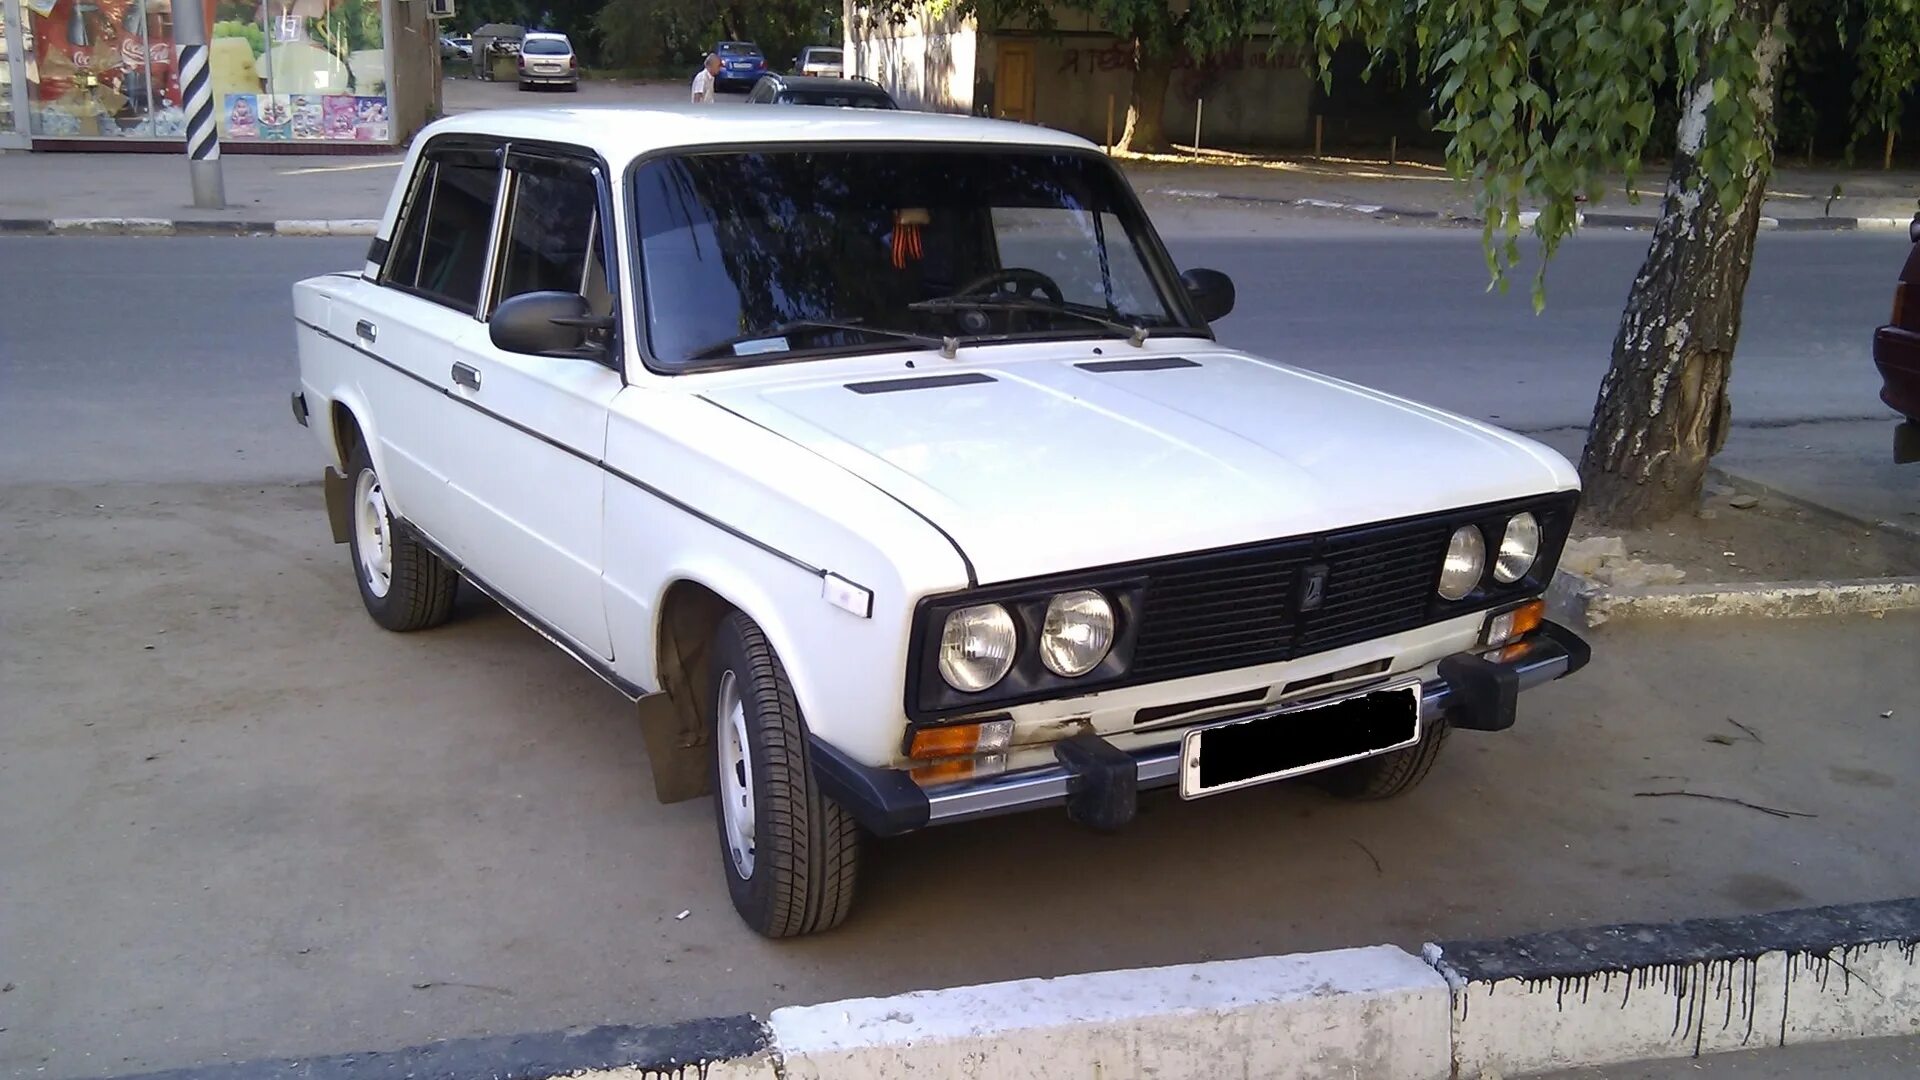 Olx avto. ВАЗ 2106 белая. ВАЗ 2106 белая новая. ВАЗ 2106 1993.